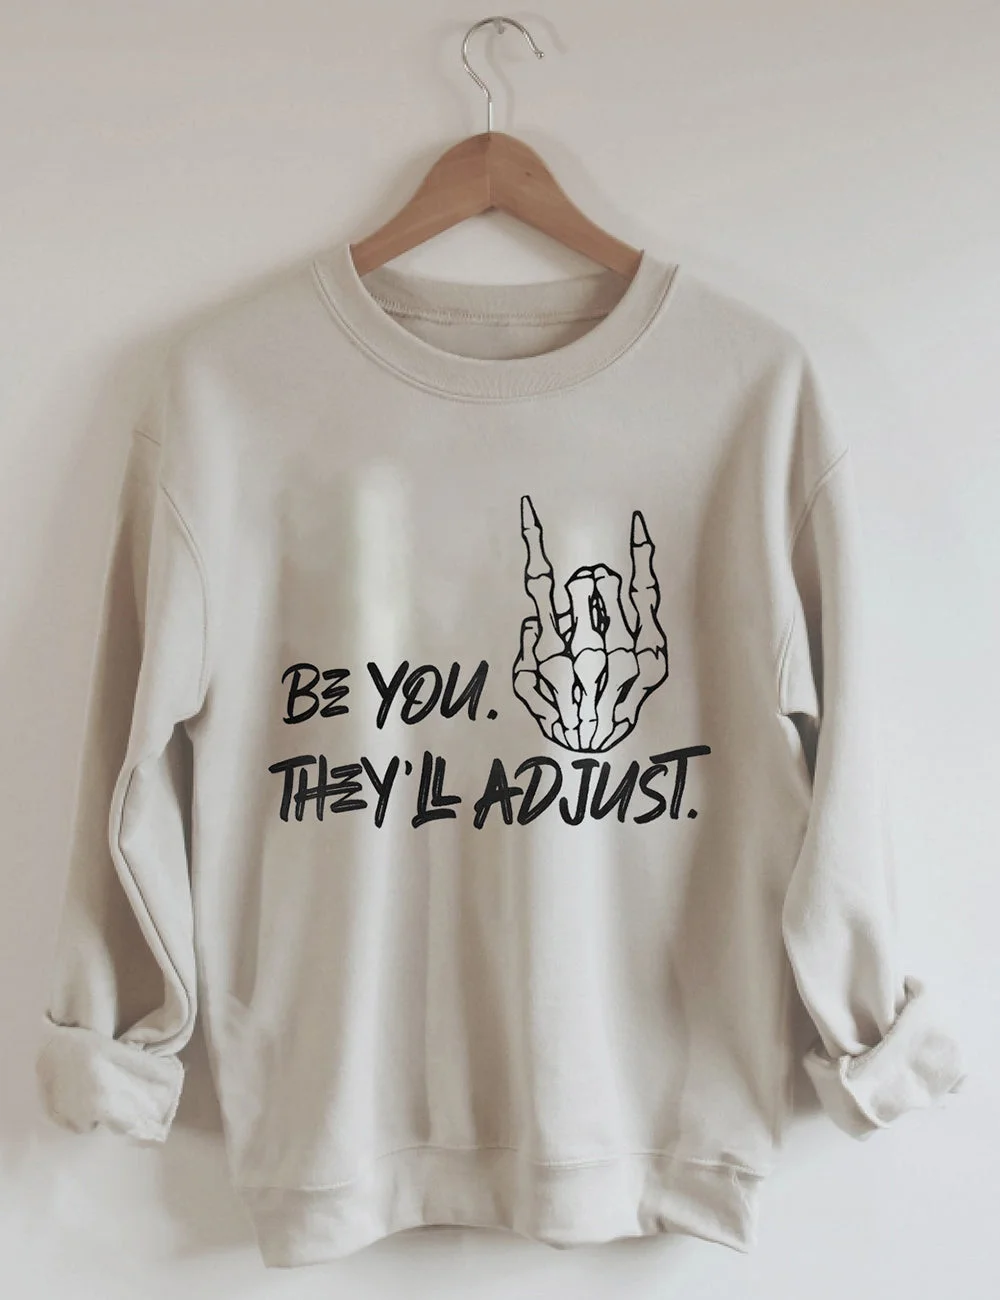 Be You They'll Adjust Sweatshirt